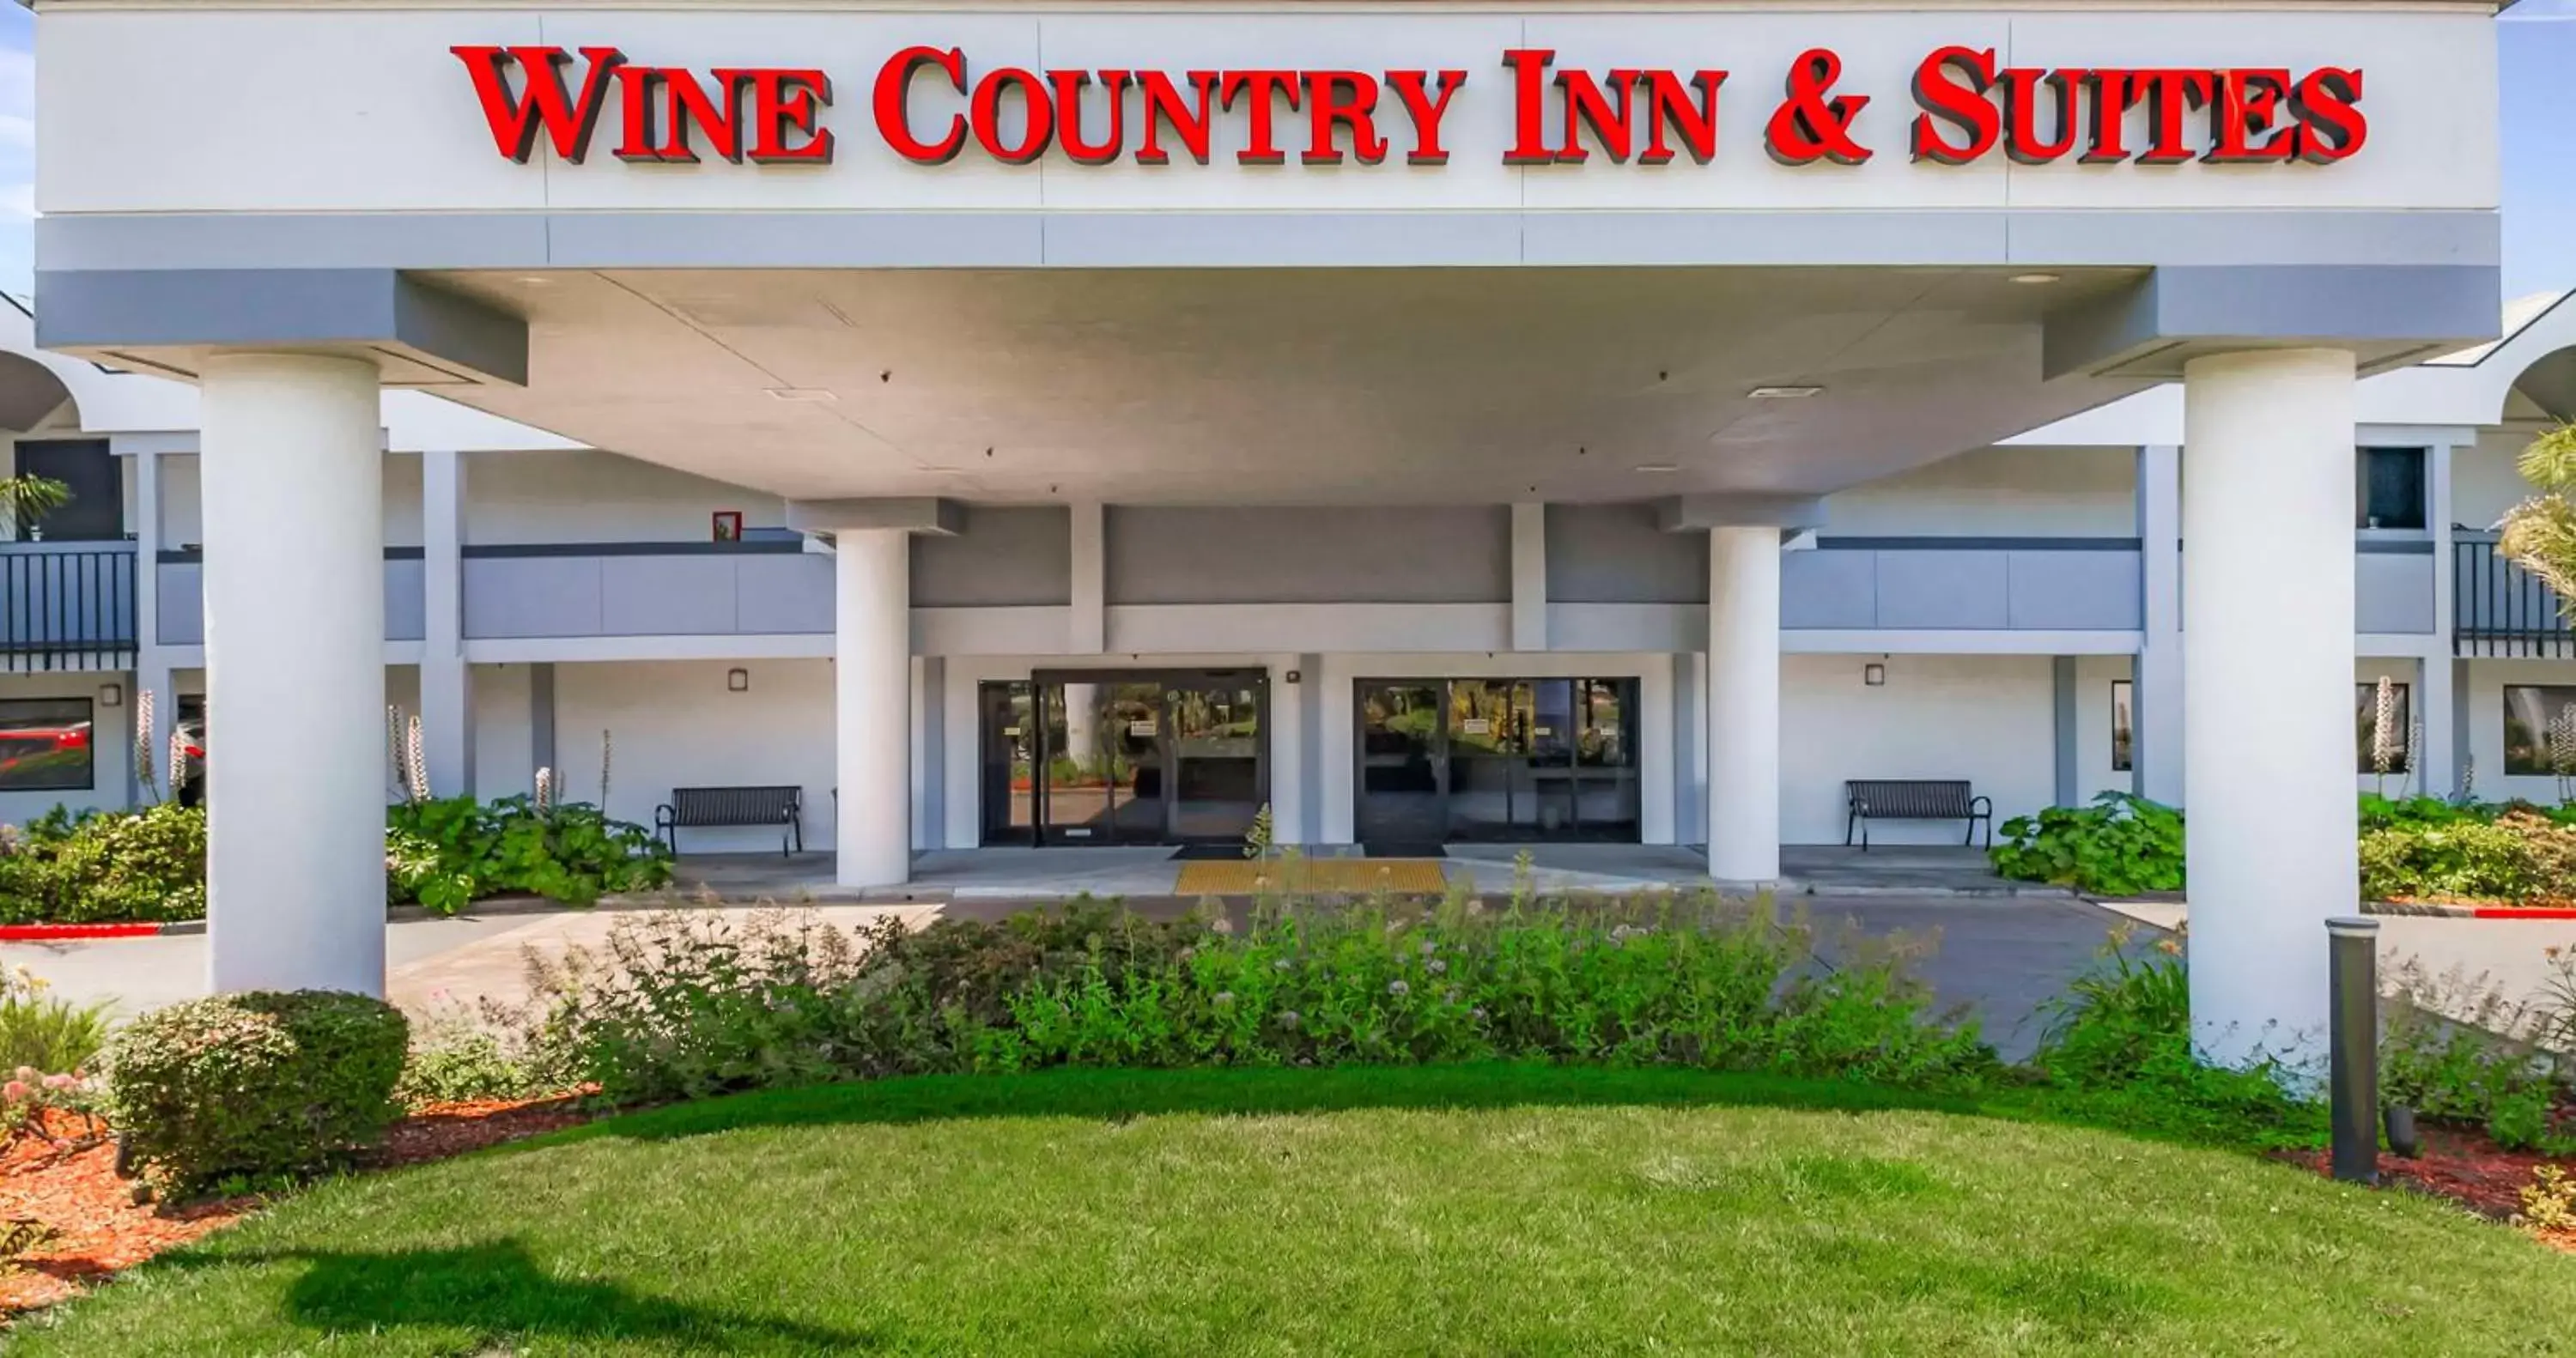 Property building in Best Western Plus Wine Country Inn & Suites